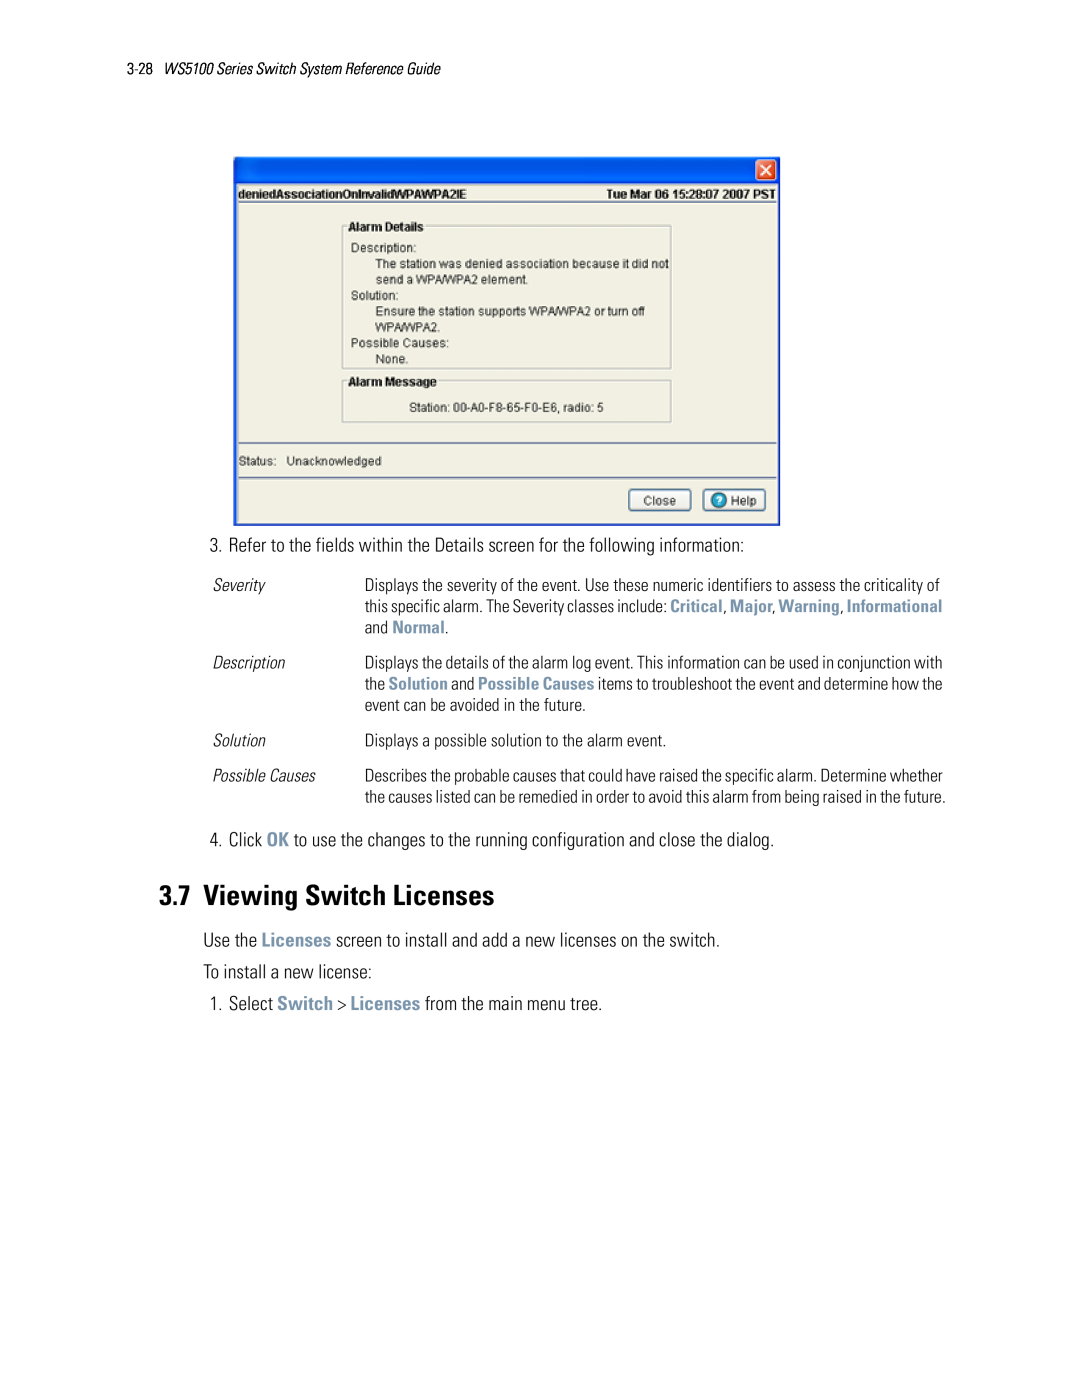 Motorola WS5100 manual 3.7Viewing Switch Licenses 